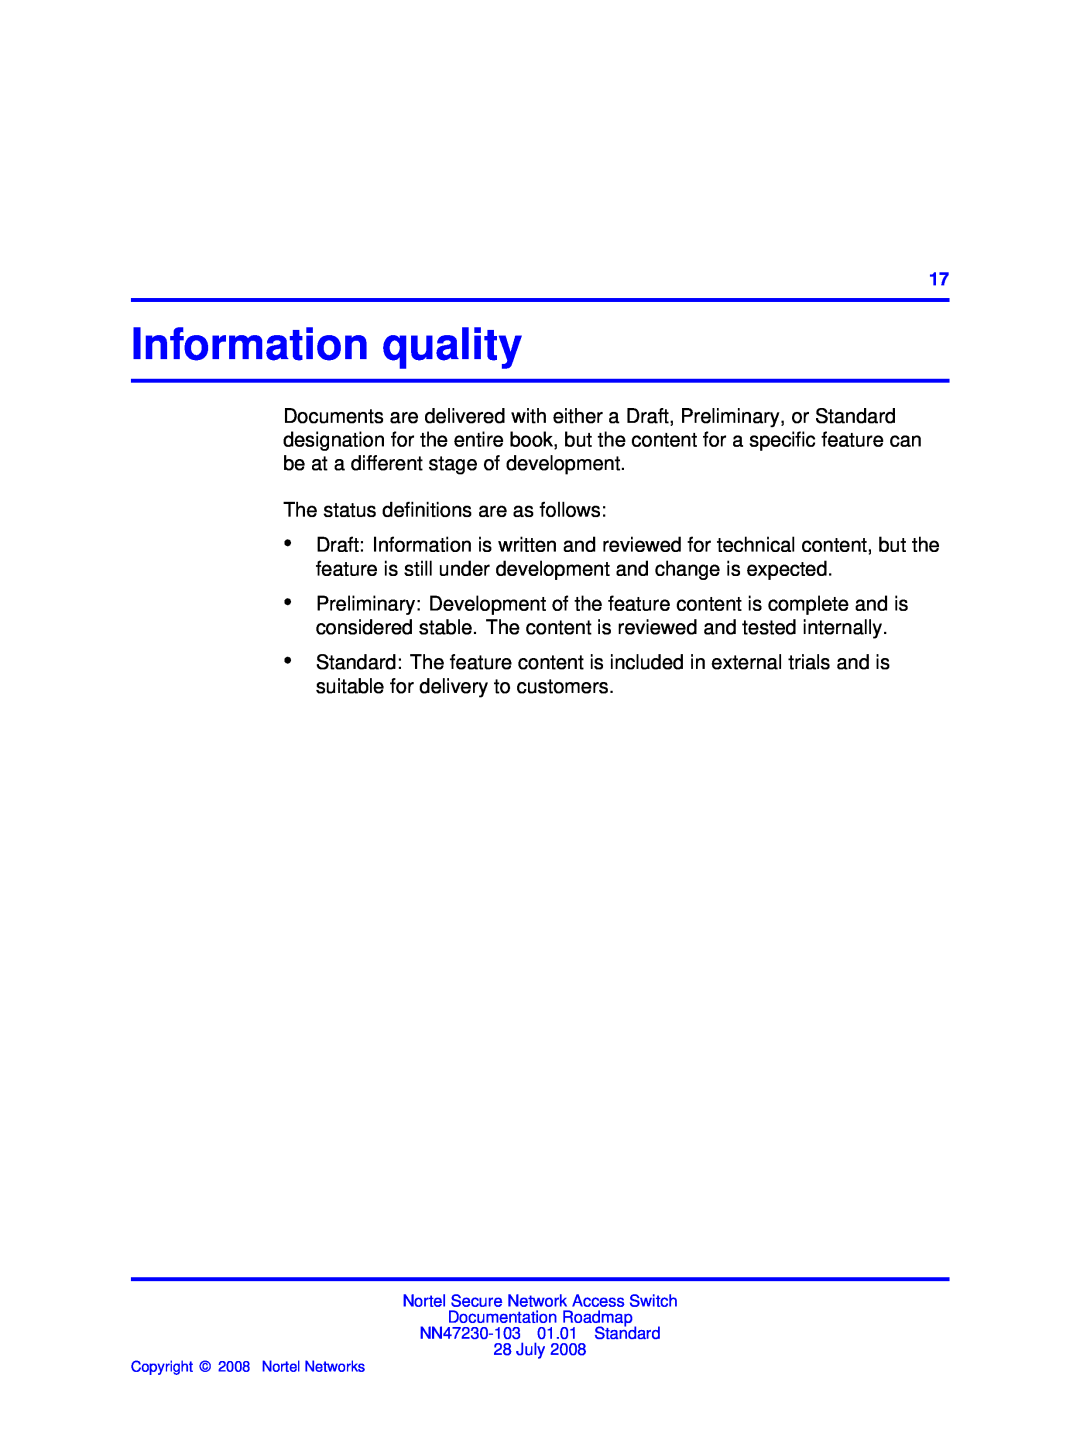 Nortel Networks NN47230-103 manual Information quality 